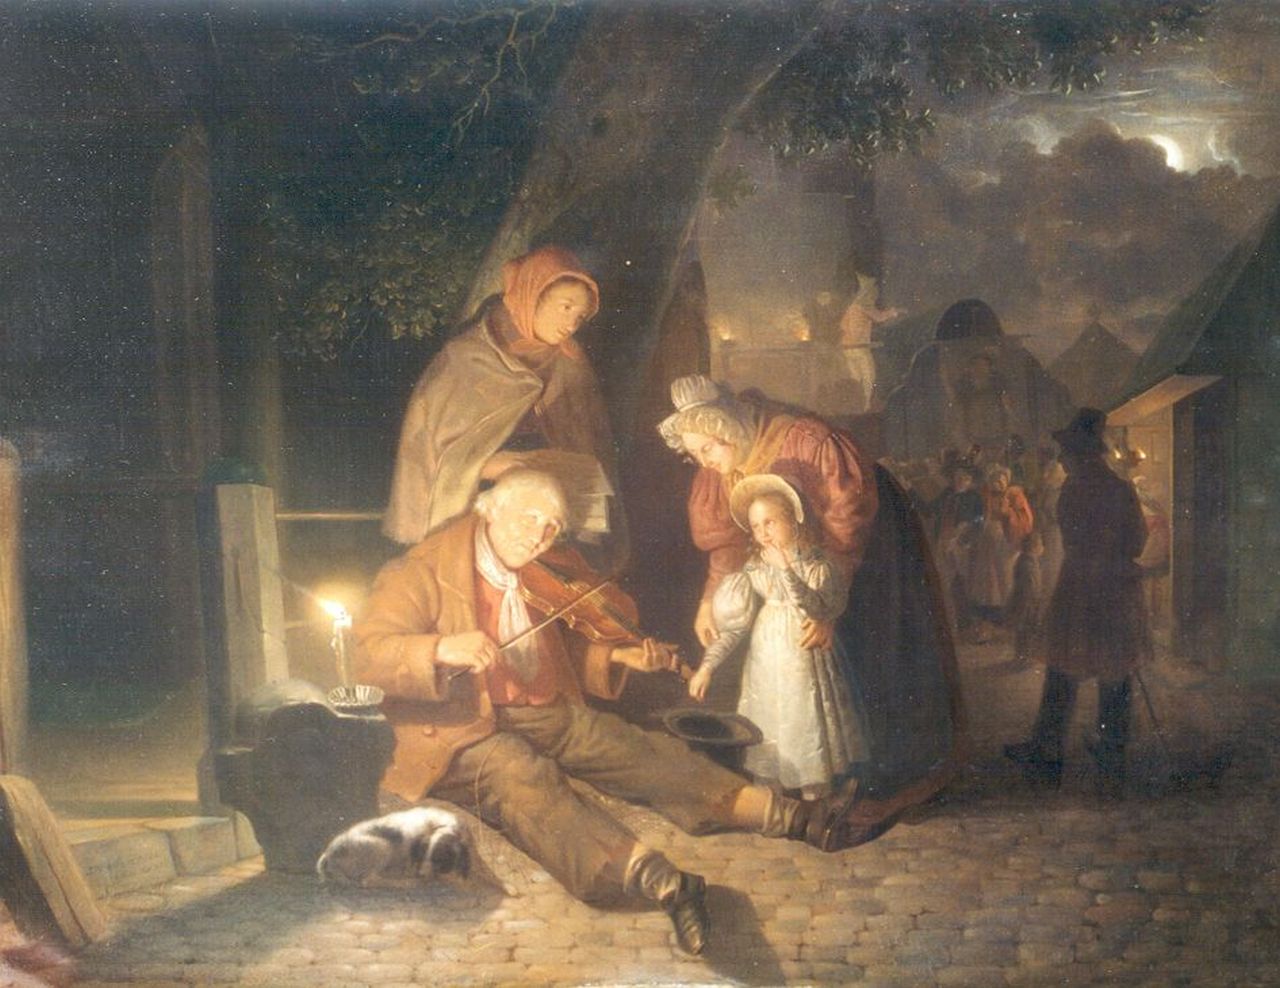 Grootvelt J.H. van | Jan Hendrik van Grootvelt, A Street Musician, Öl auf Holz 44,5 x 57,3 cm, signed l.l. und dated 1835